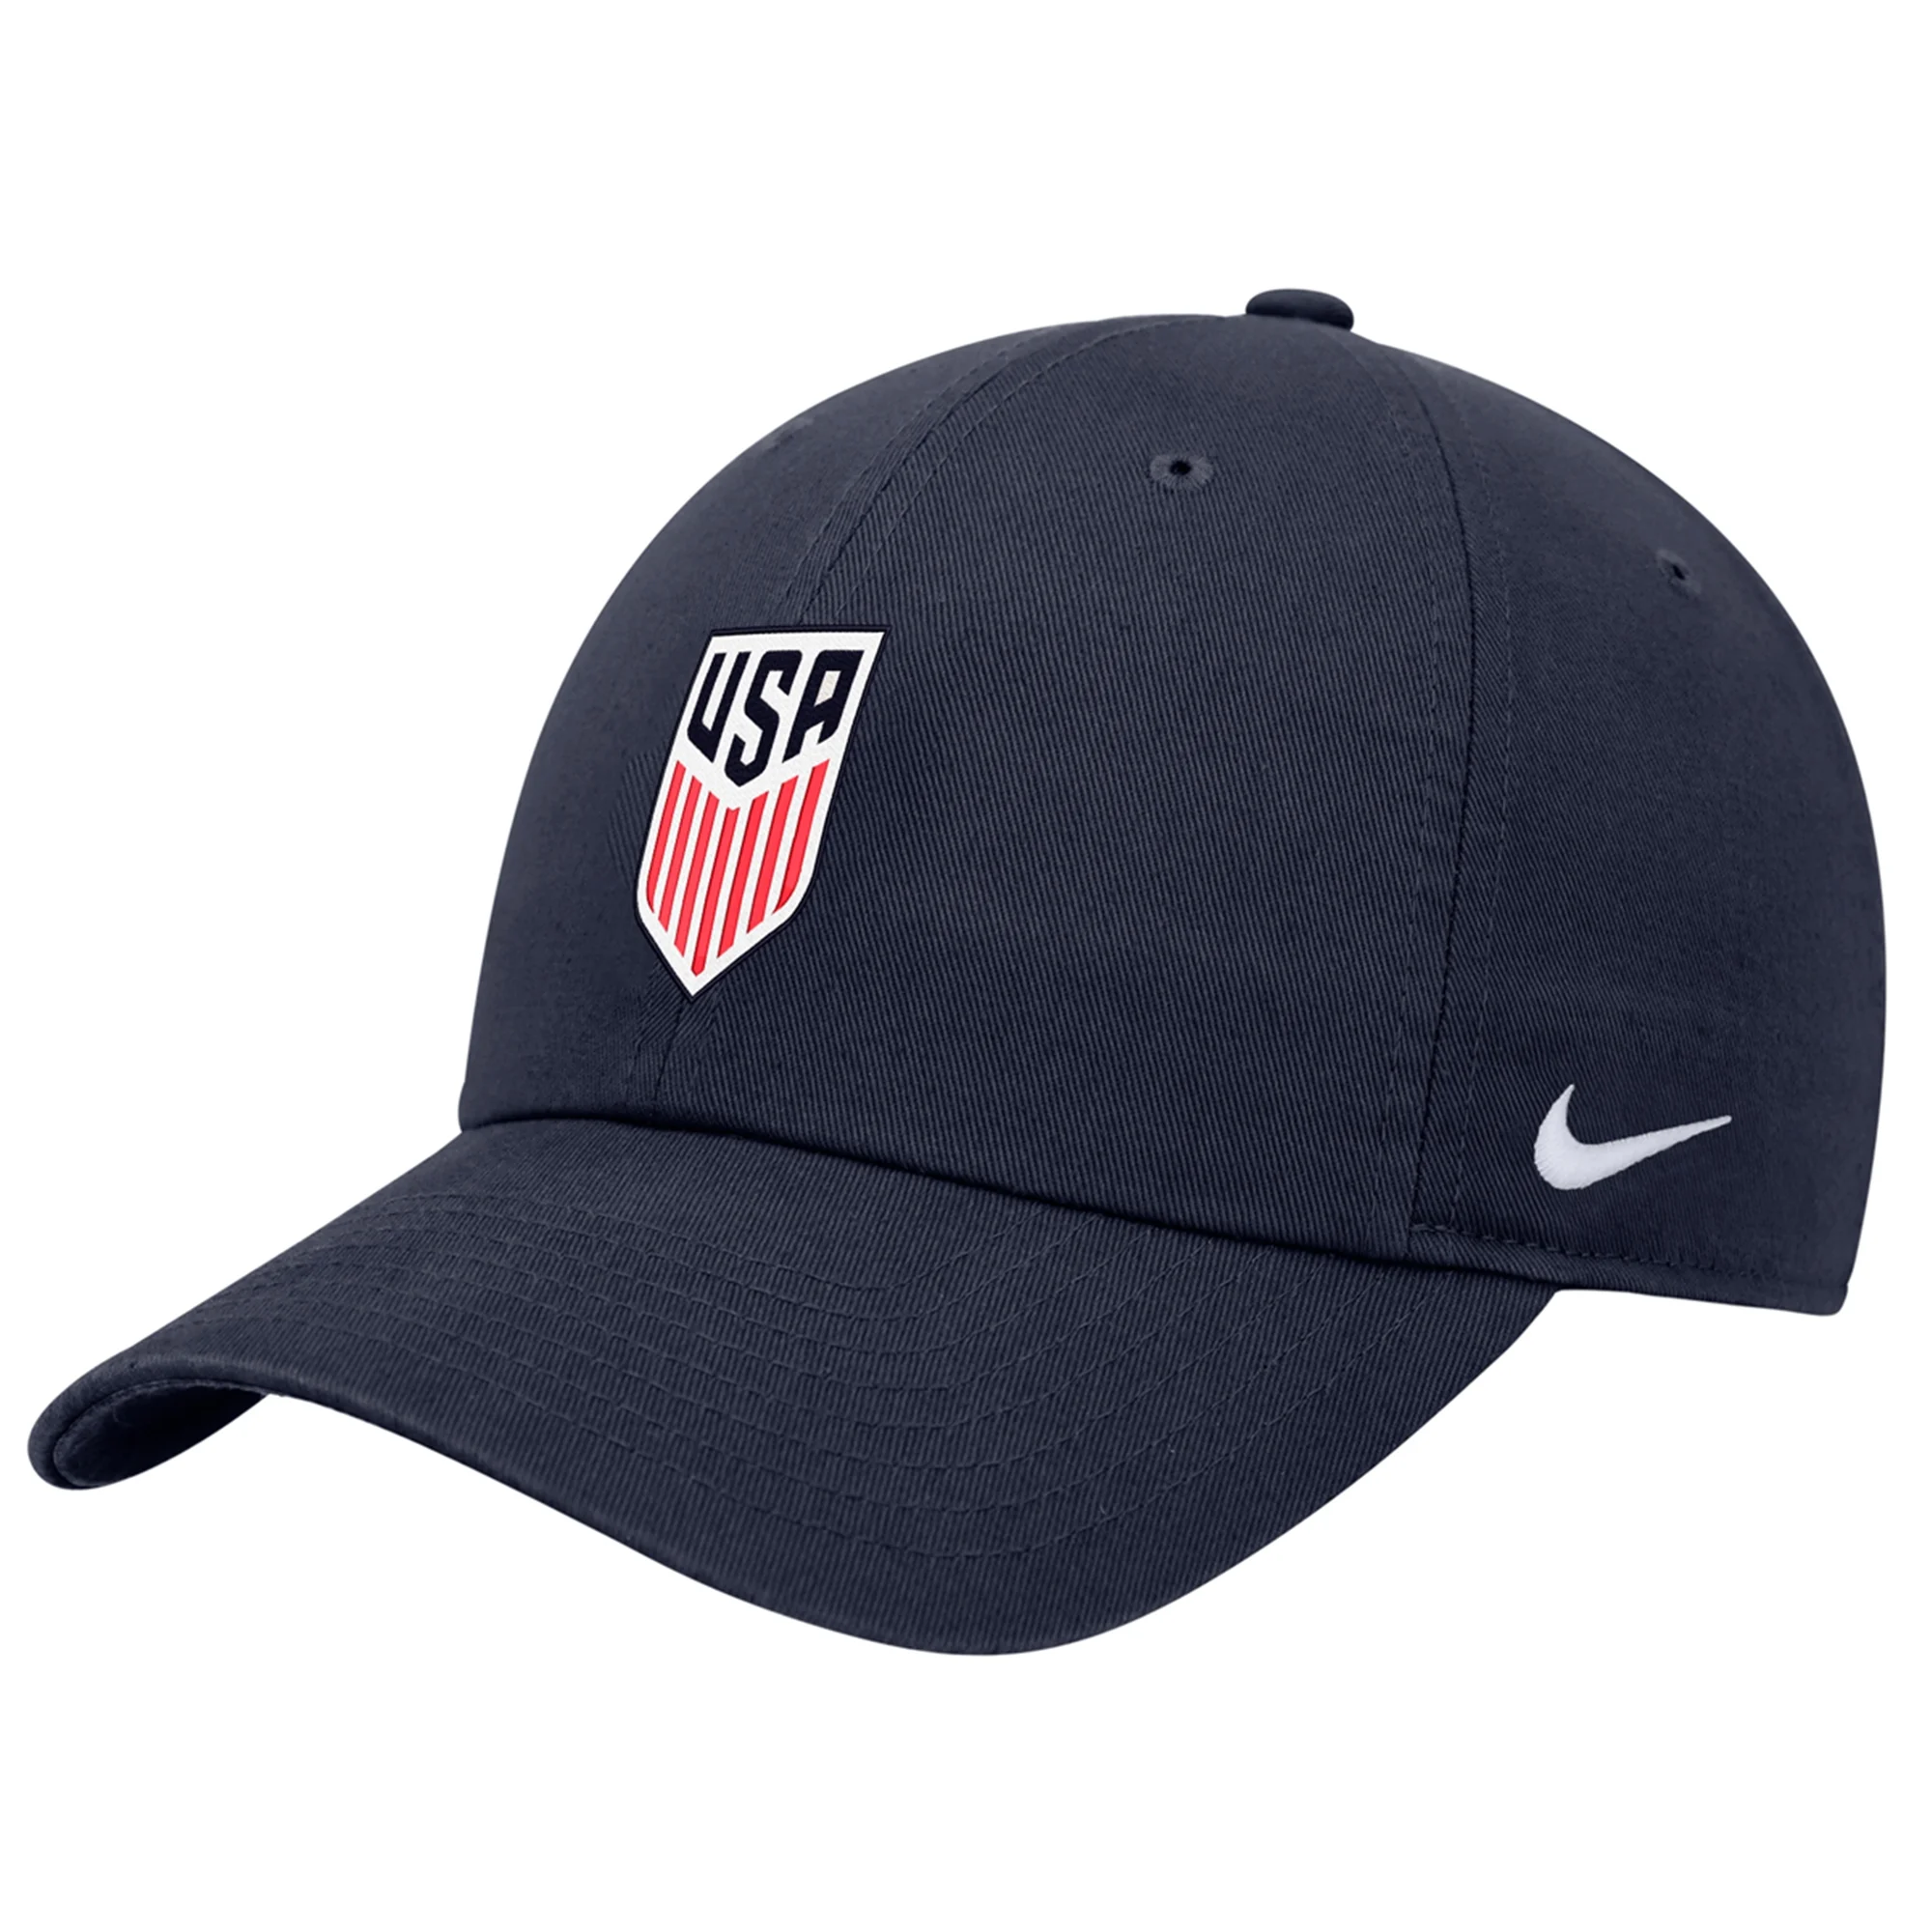 Nike USA Club Cap Adjustable Hat